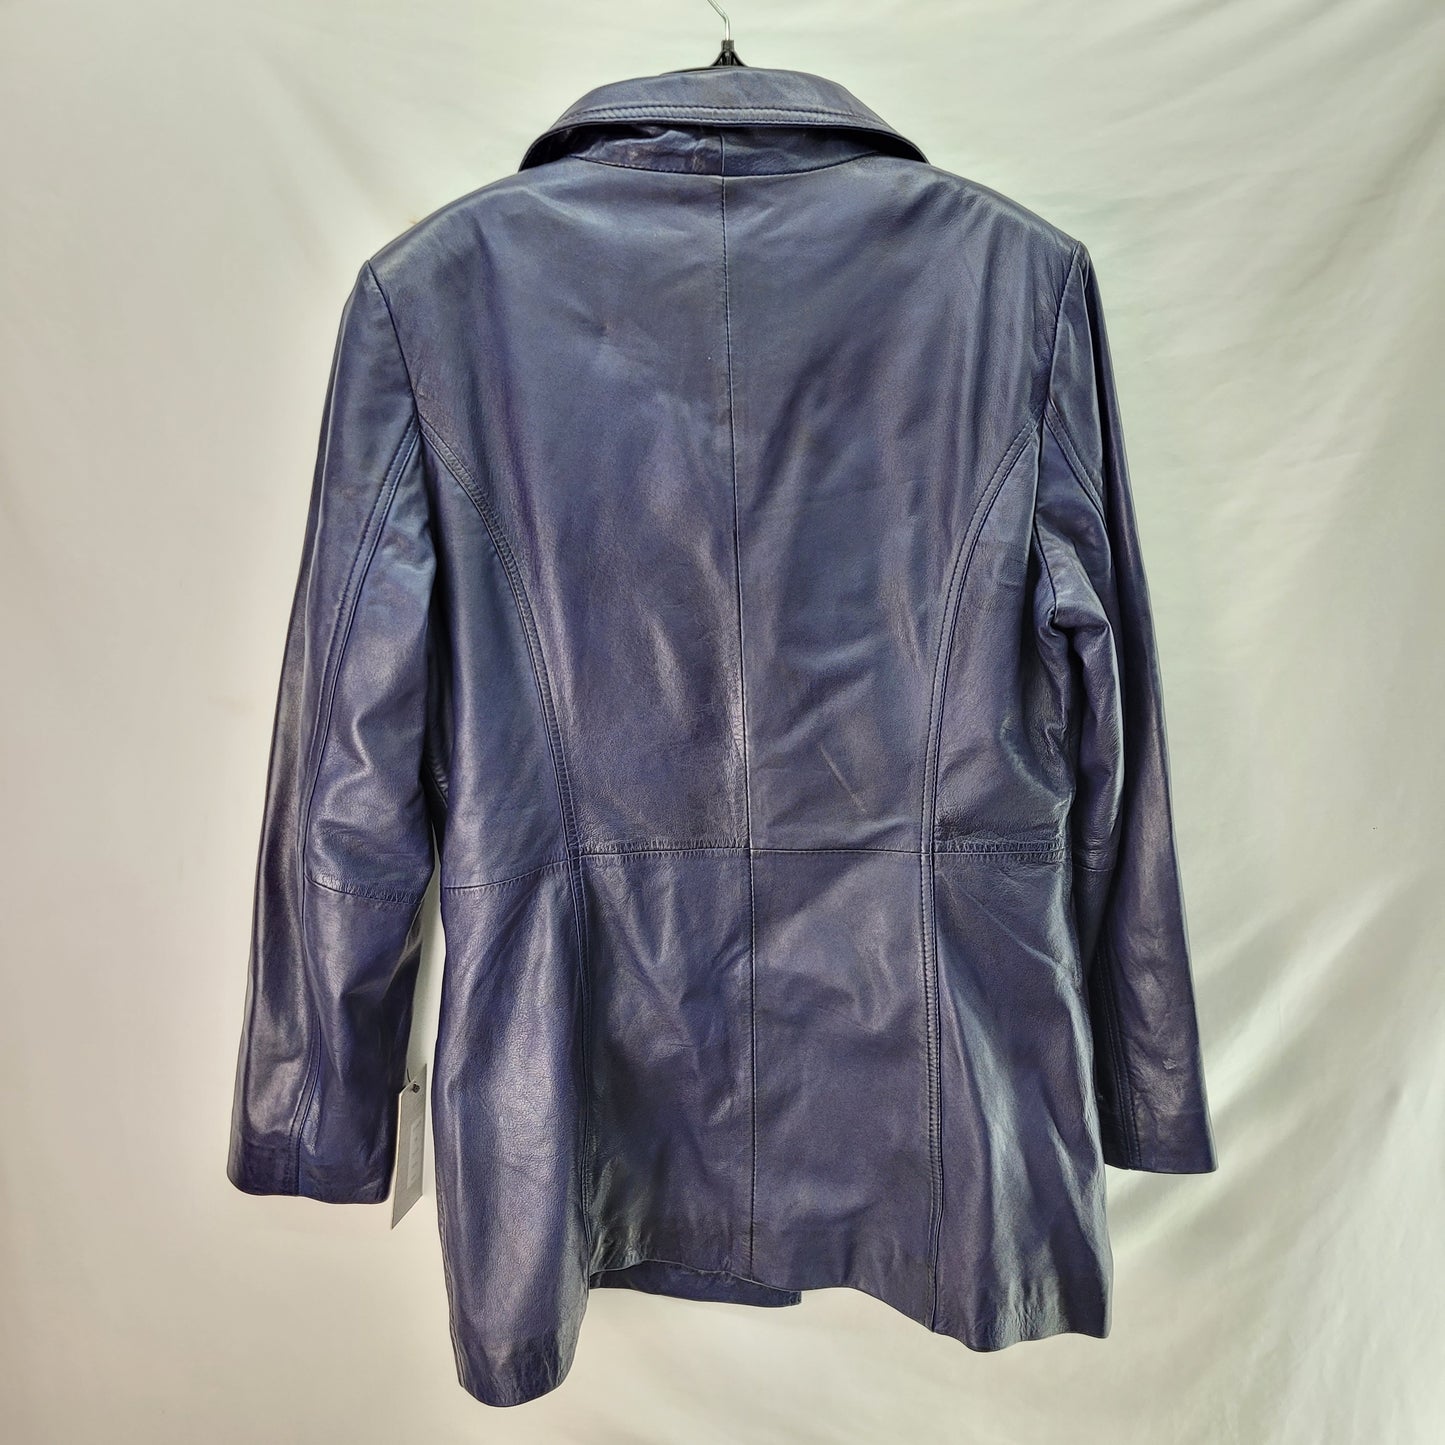 Boutique Of Leathers Women's Jacket Blue - Size 14